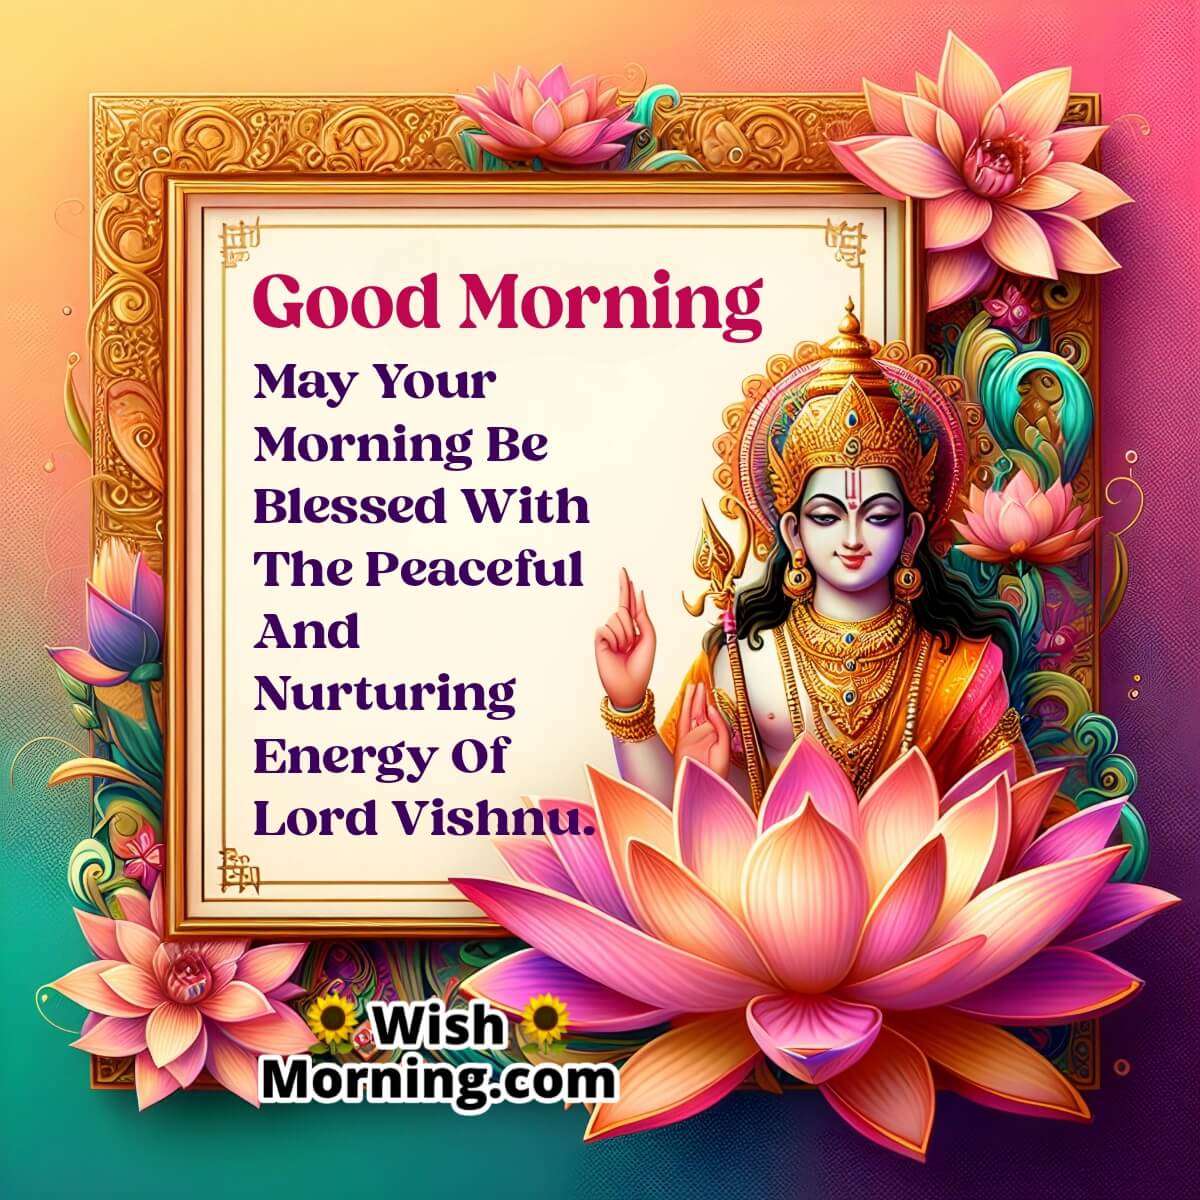 Morning Blessings From Lord Vishnu